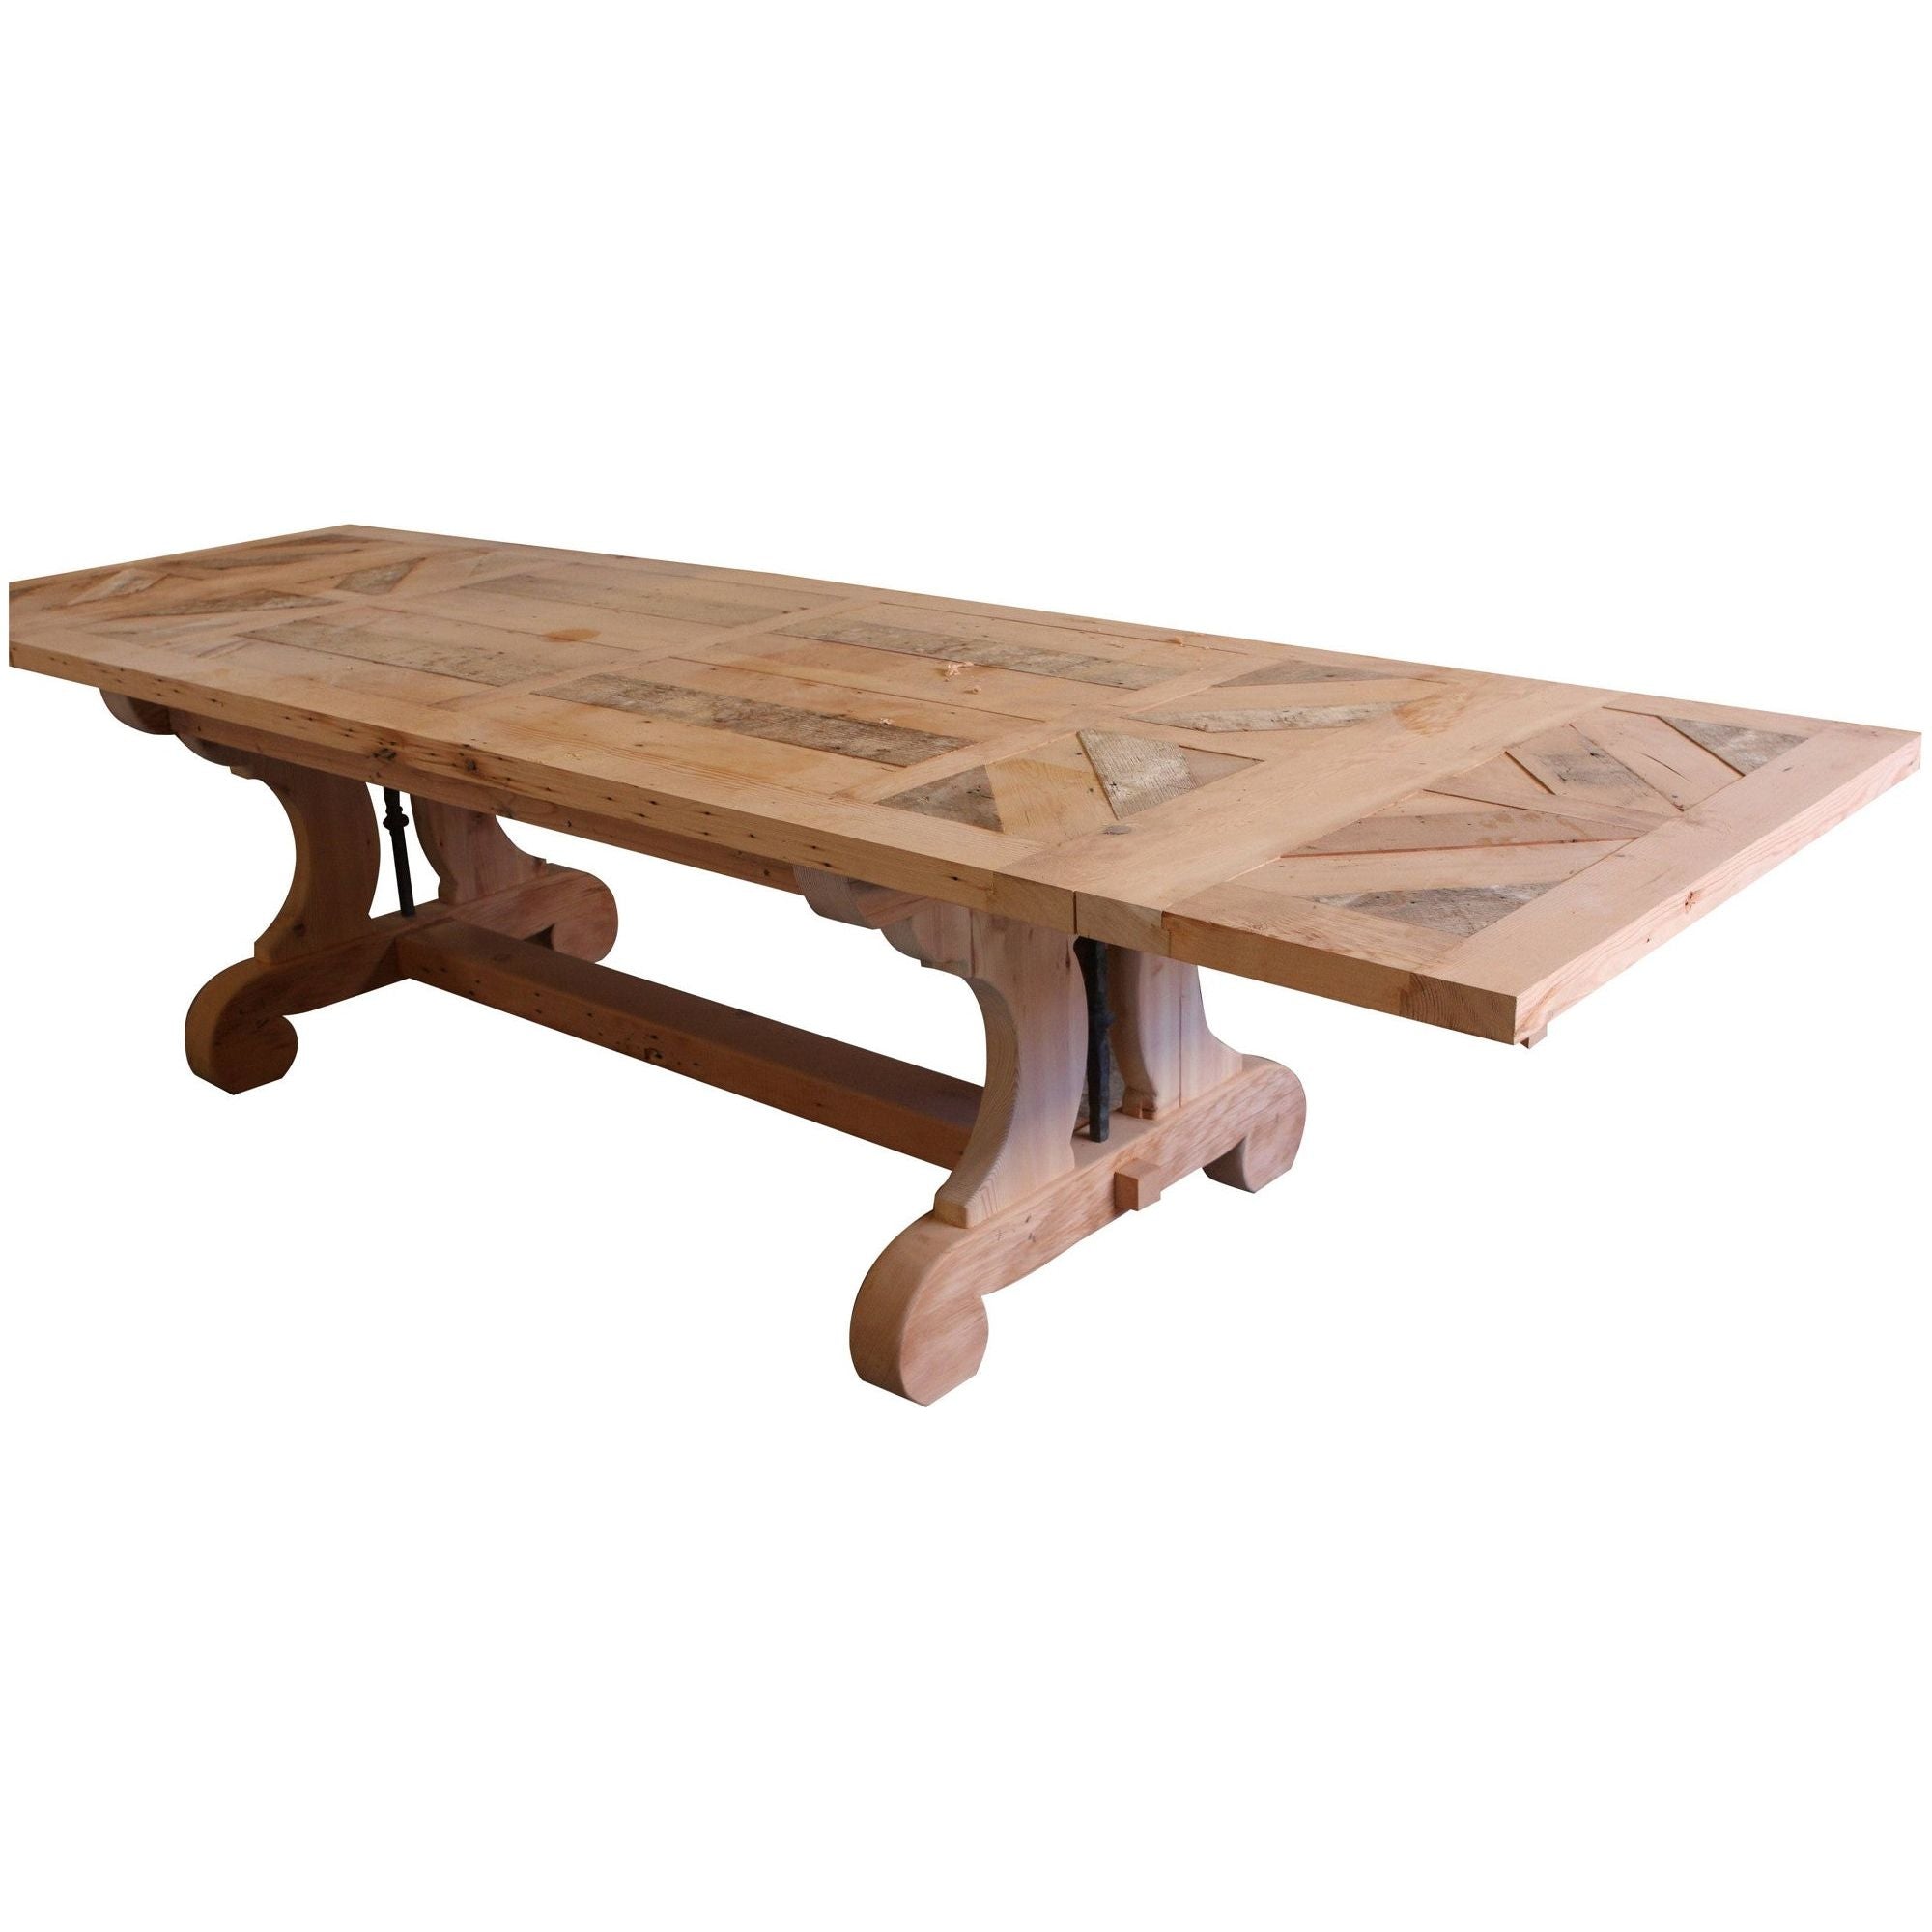 Herringbone Designed Table Top - Mortise & Tenon